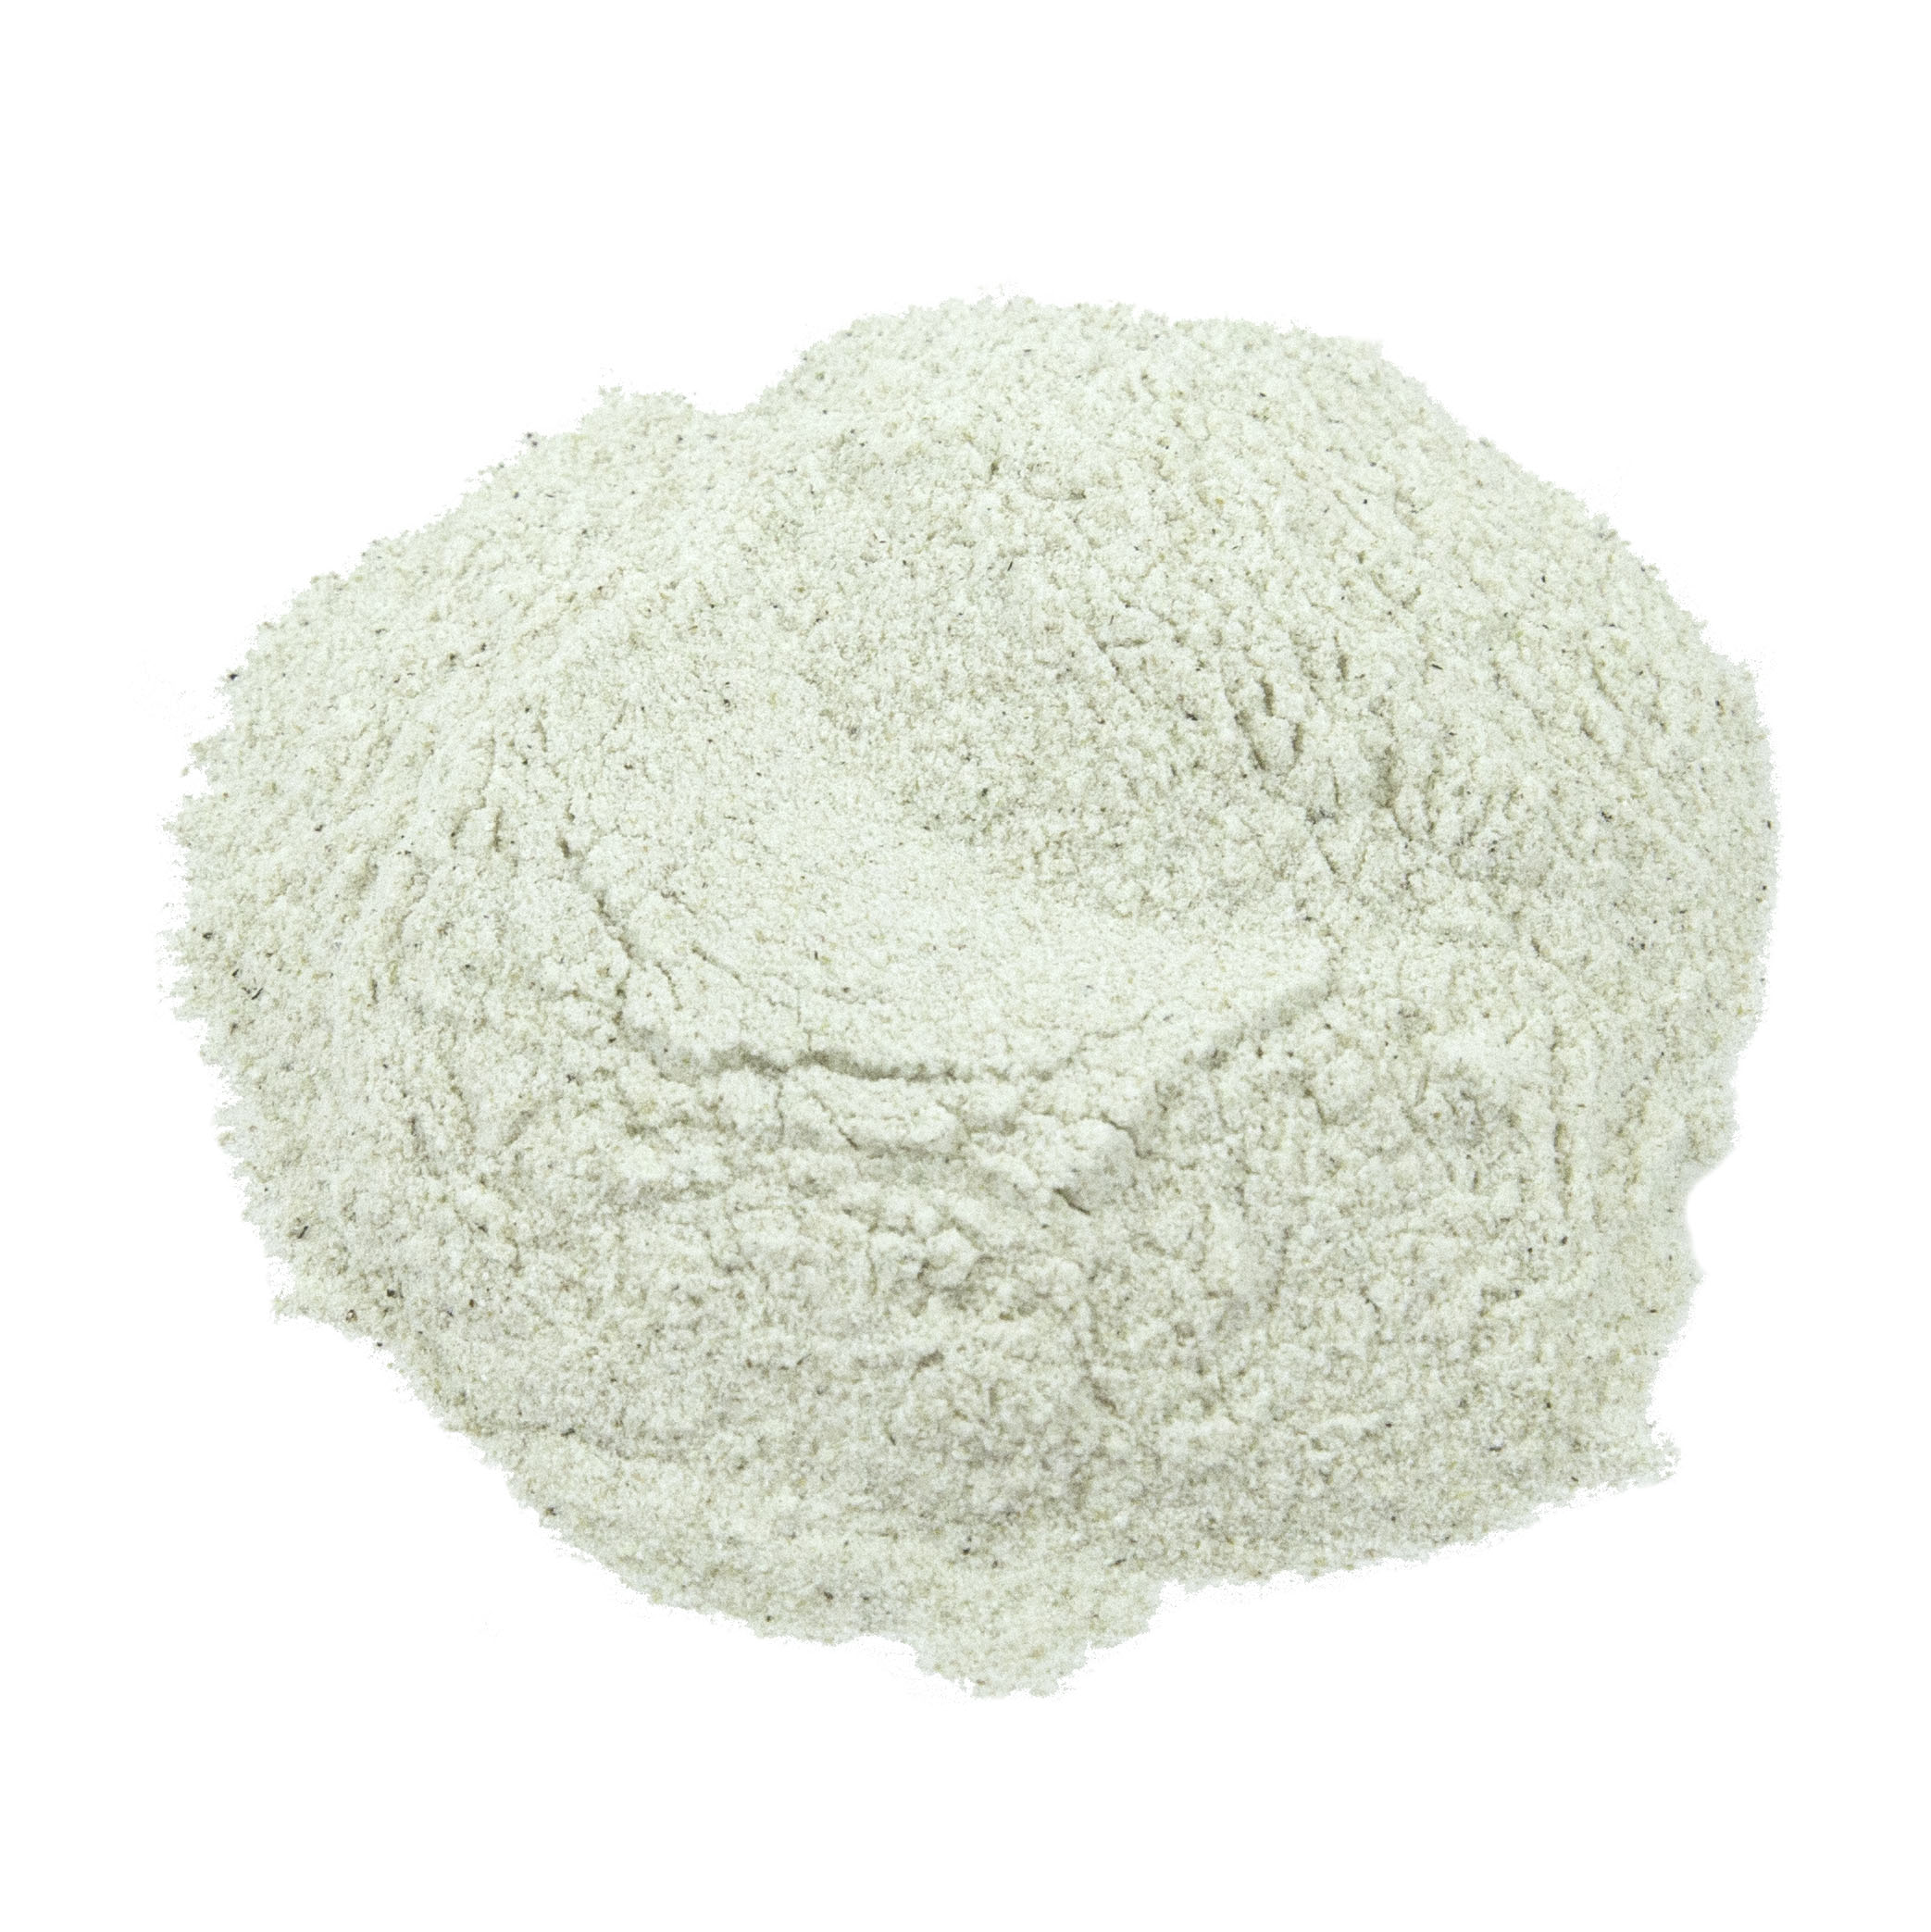 Organic Light Buckwheat Flour